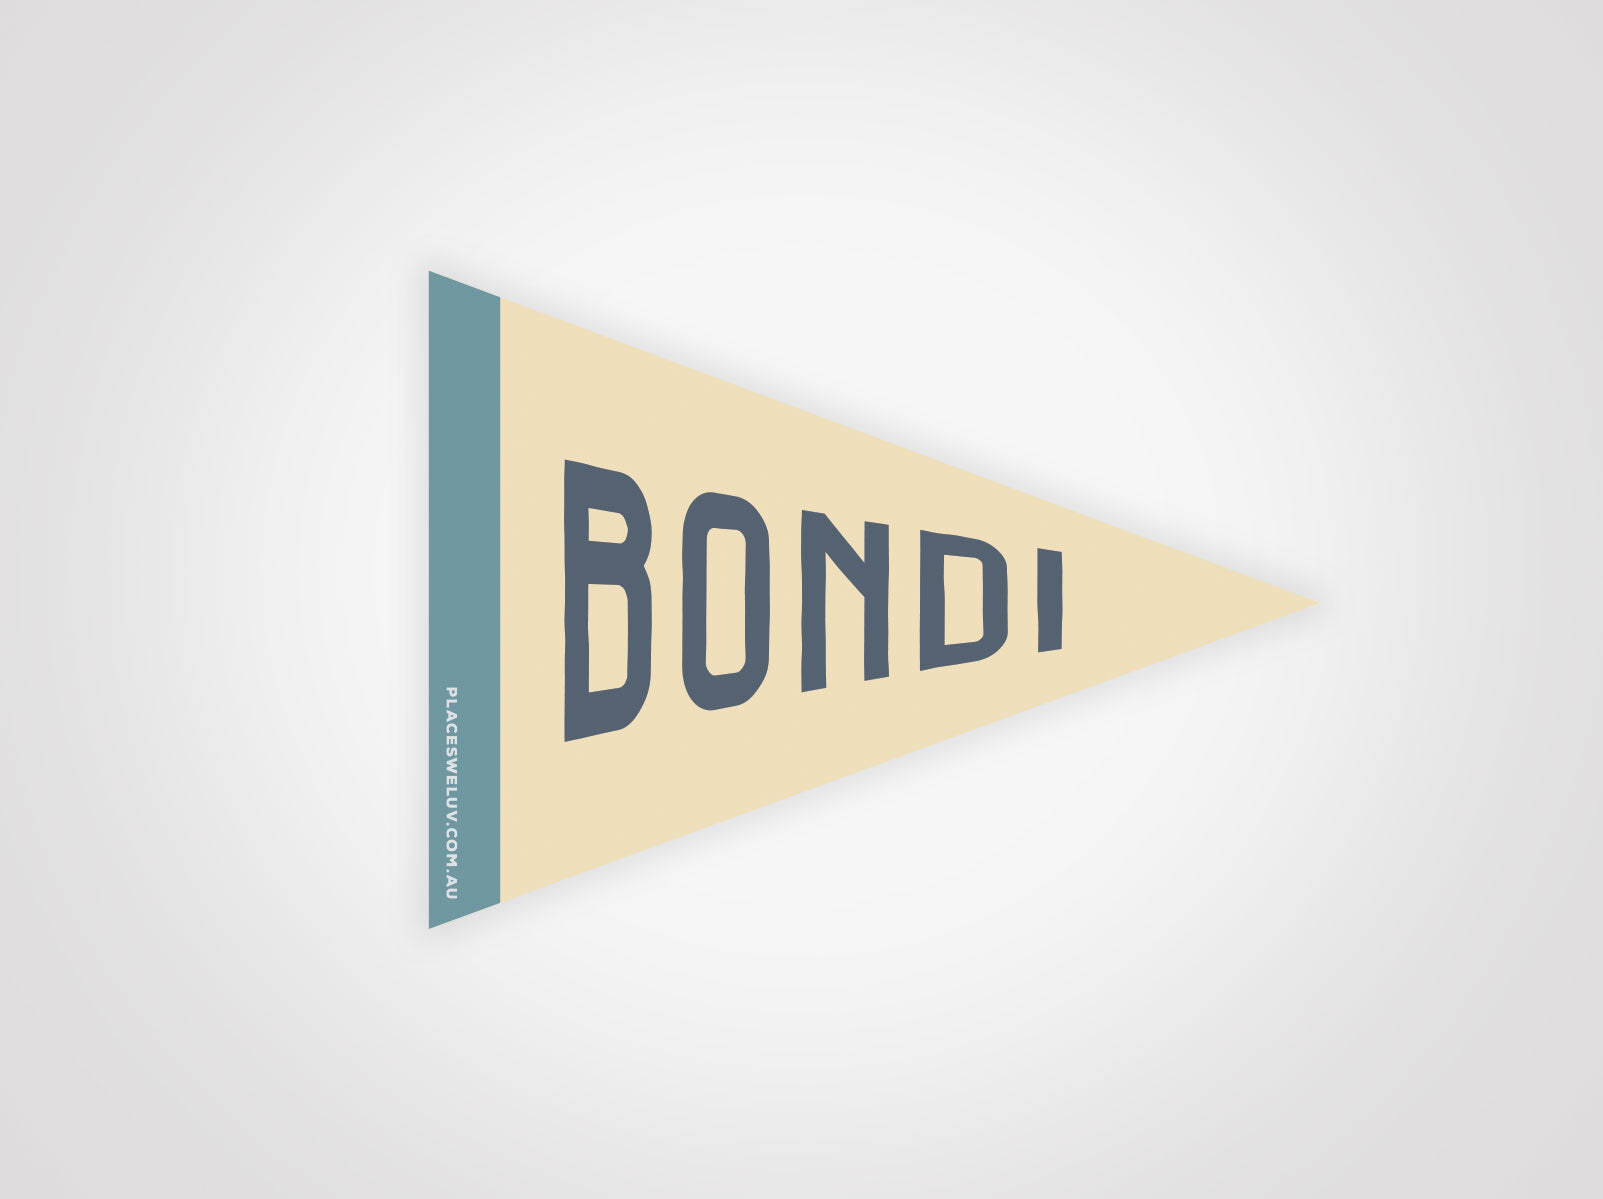 Bondi Vintage travel style Flag decal retro design by place we luv